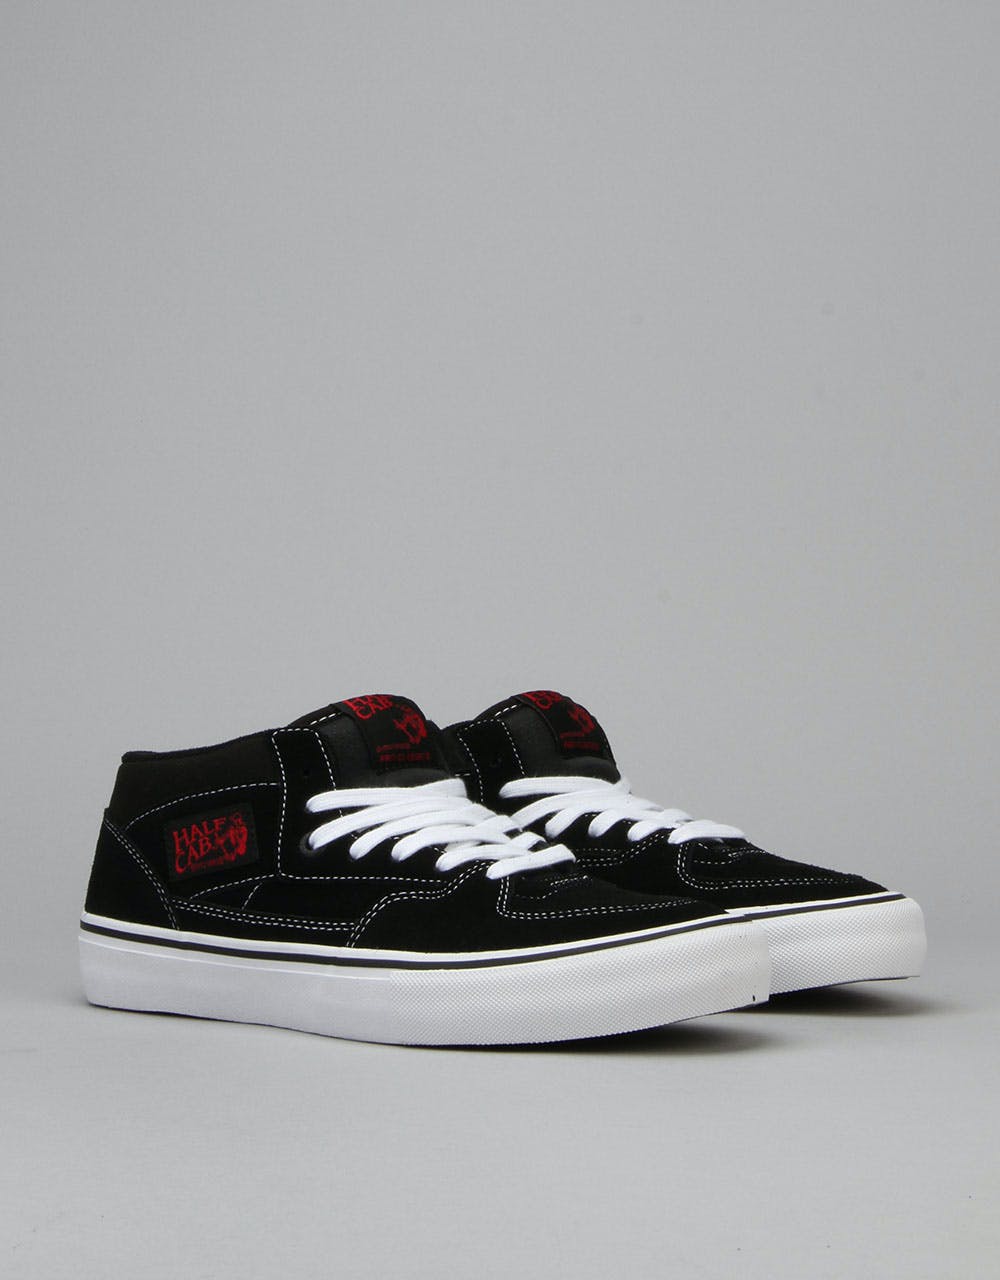 Vans Half Cab Pro Skate Shoes - Black/White/Red